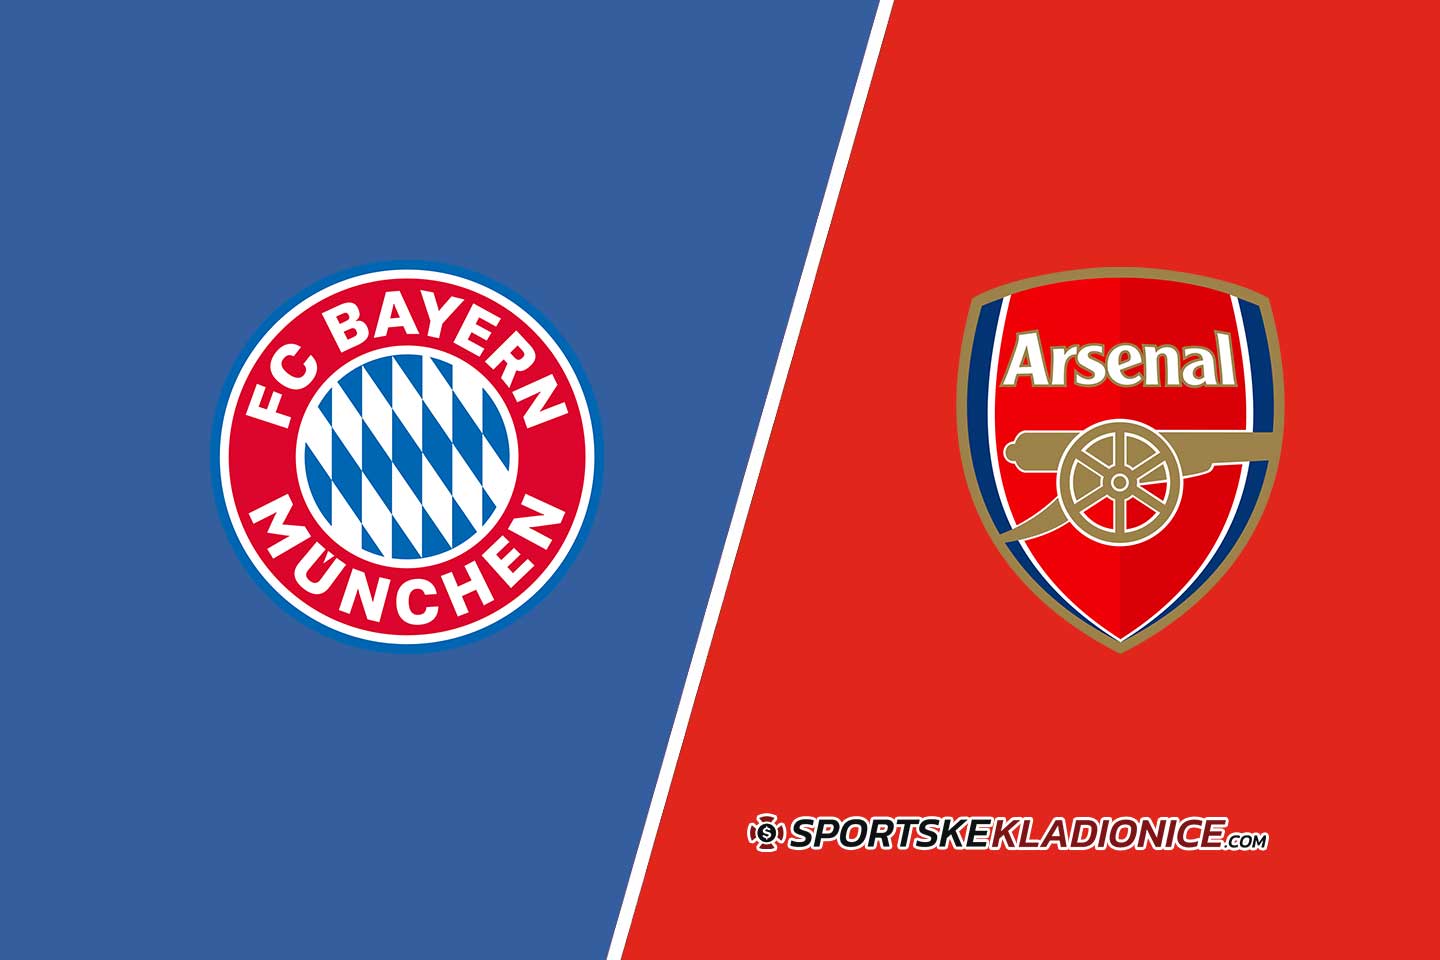 Bayern vs Arsenal